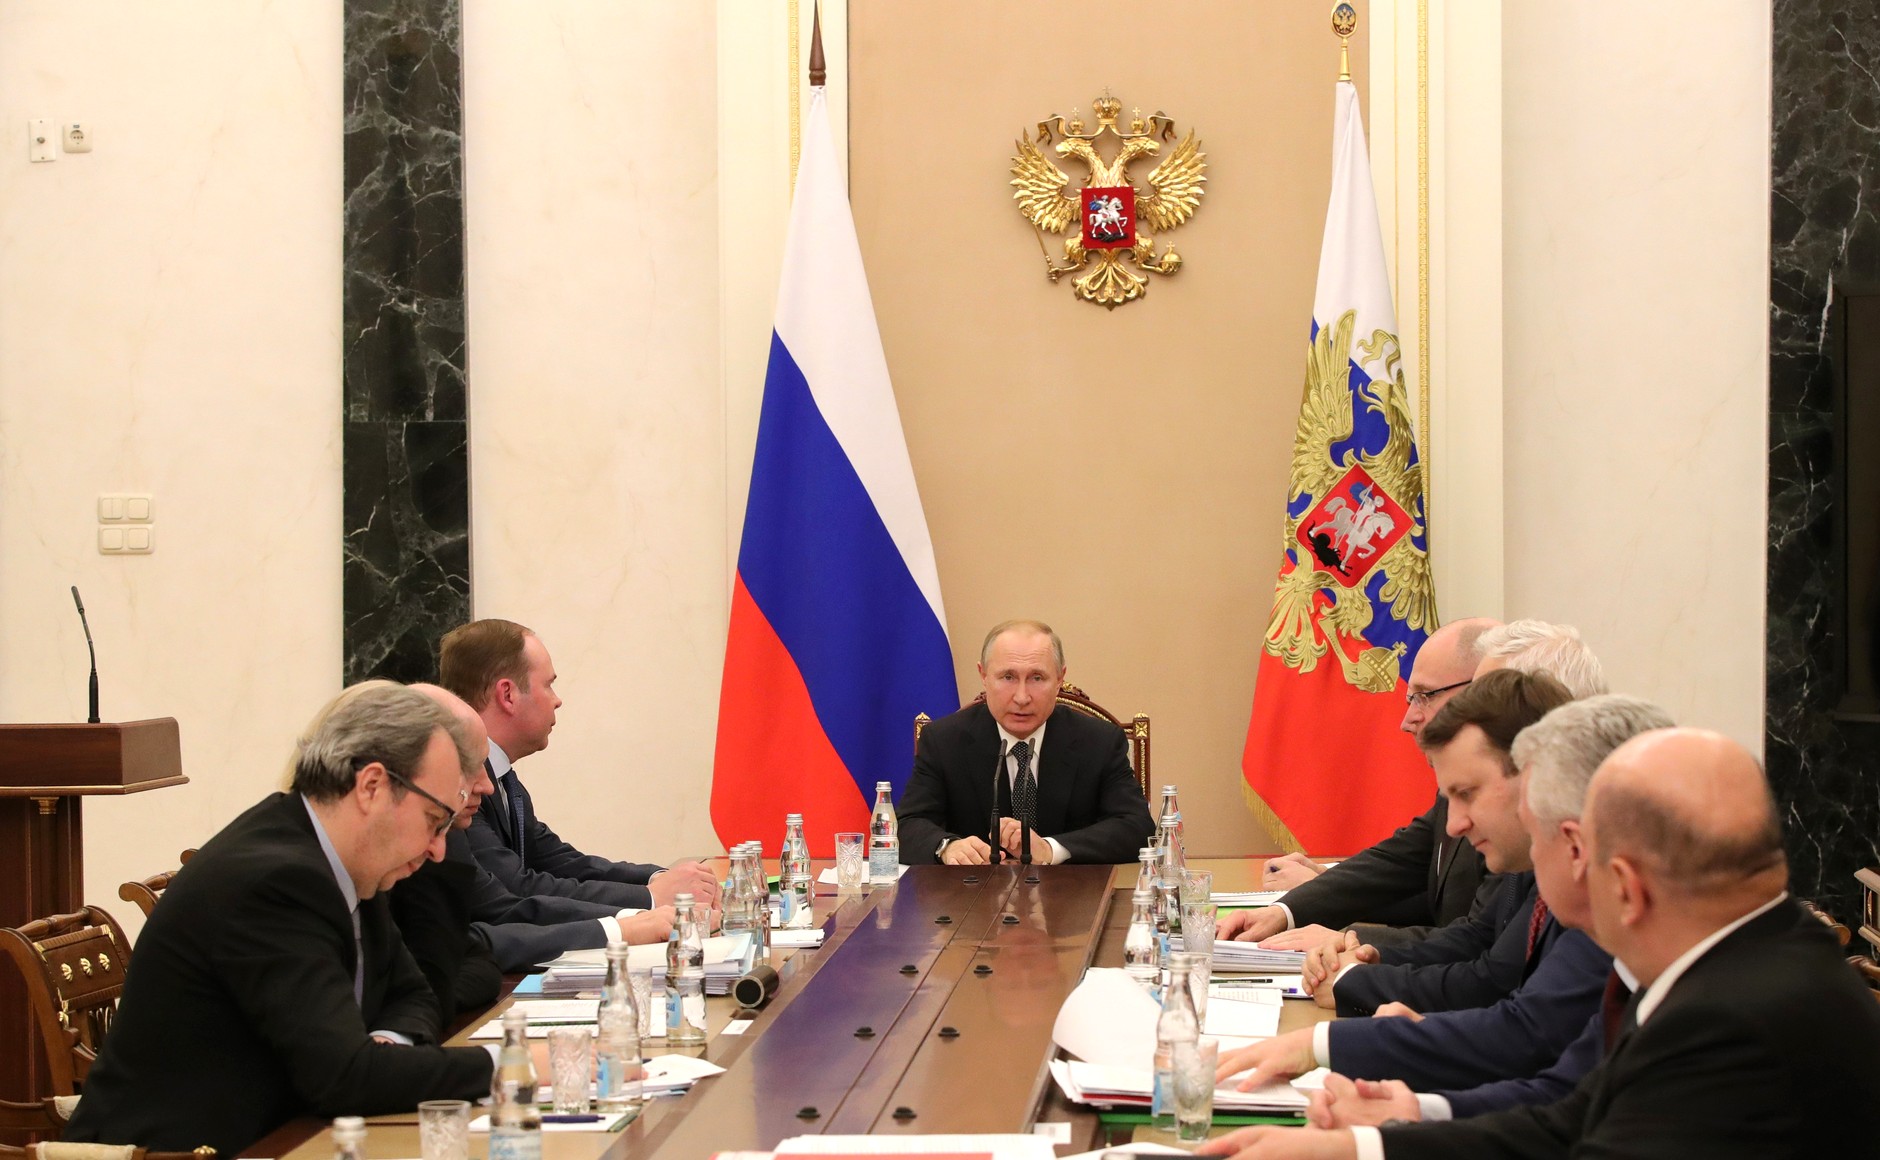 Дмитрию Медведеву глава государства предложил новый пост в Совете безопасности Фото: © Global Look Press / Kremlin Pool